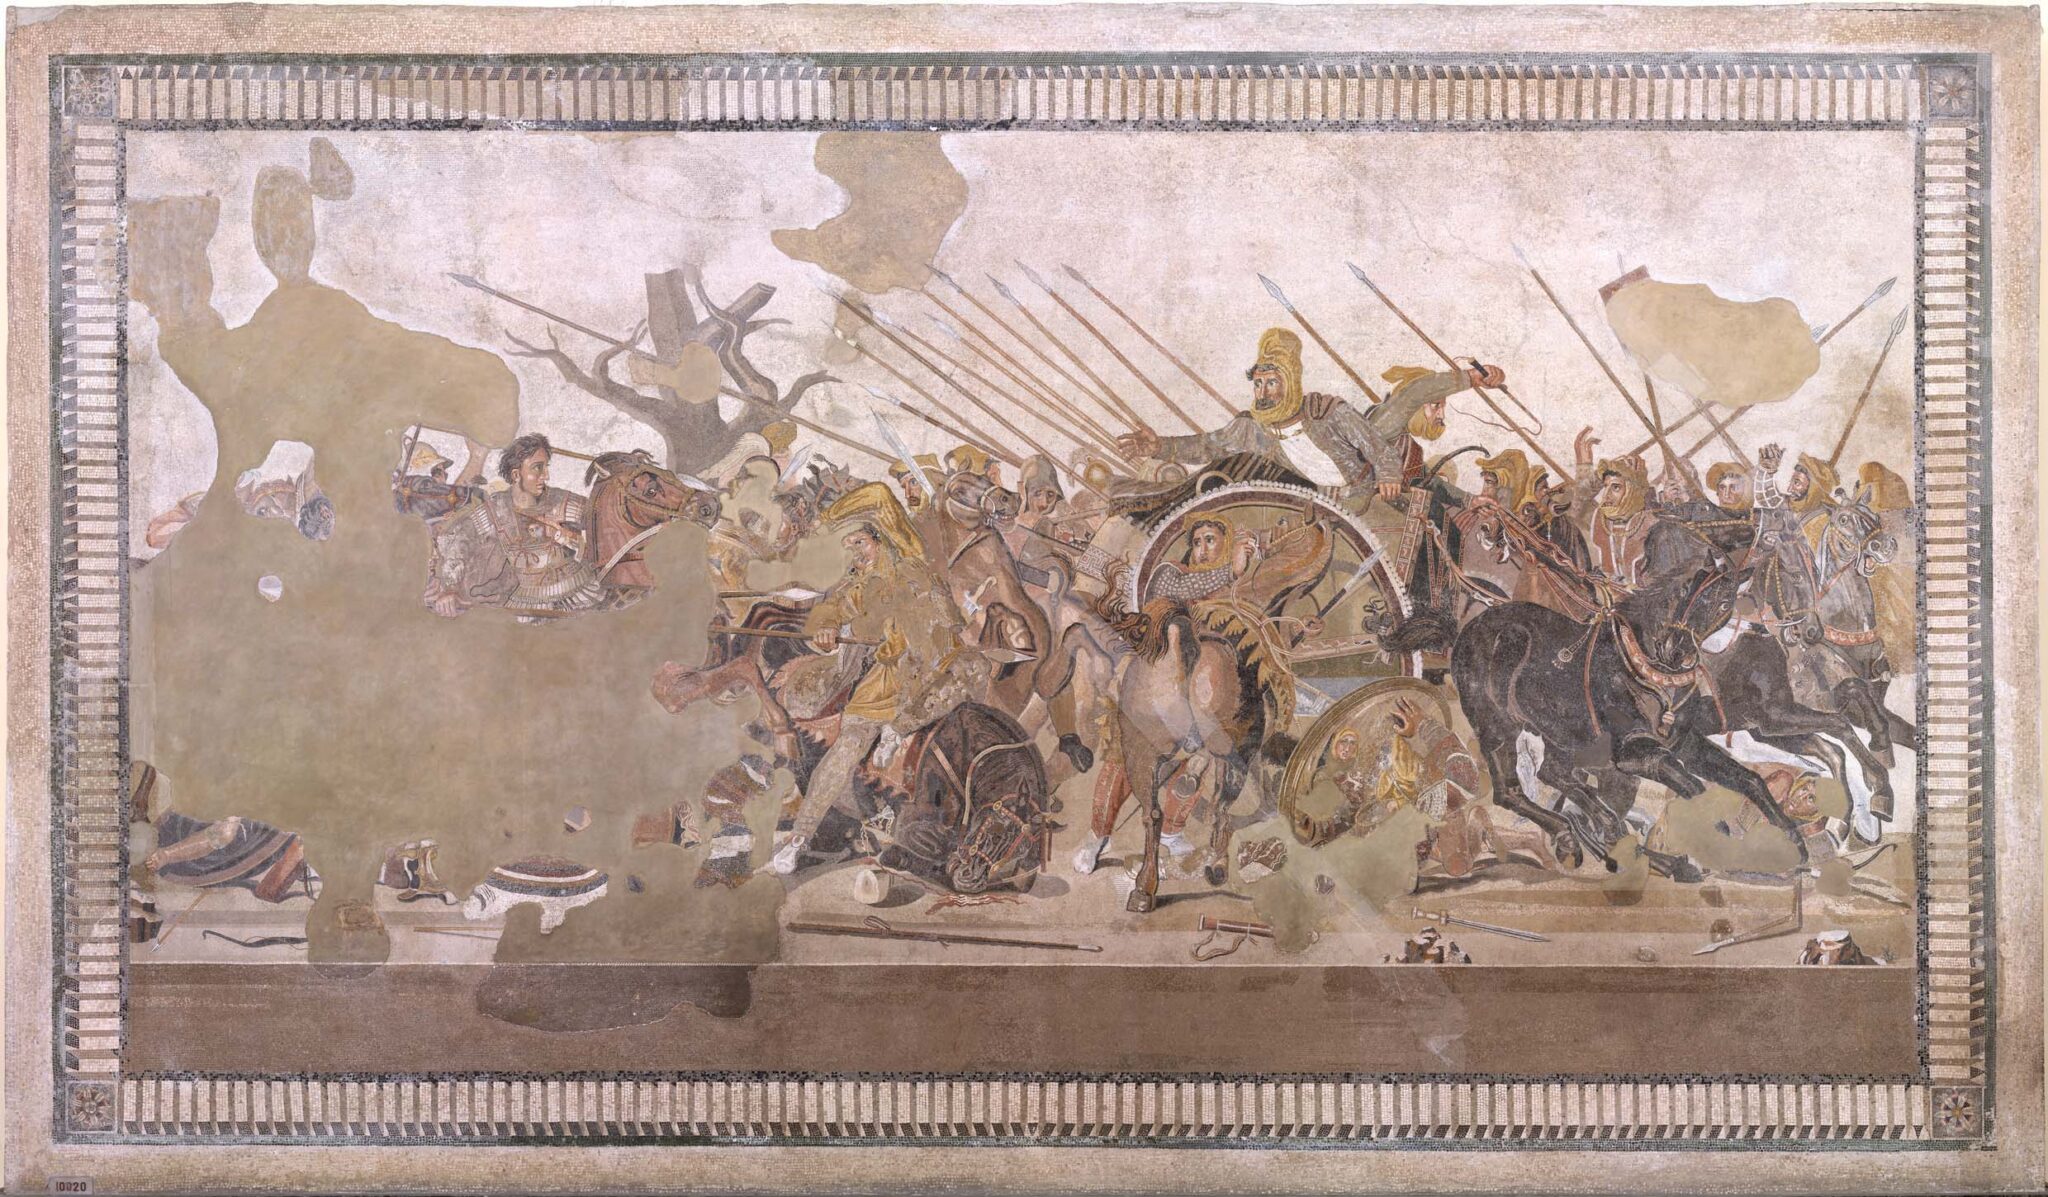 <p><strong>Alexander Mosaic</strong></p><p>Republican Roman</p><p>Pompeii, Italy</p><p>100 BCE<br>Mosaic</p>